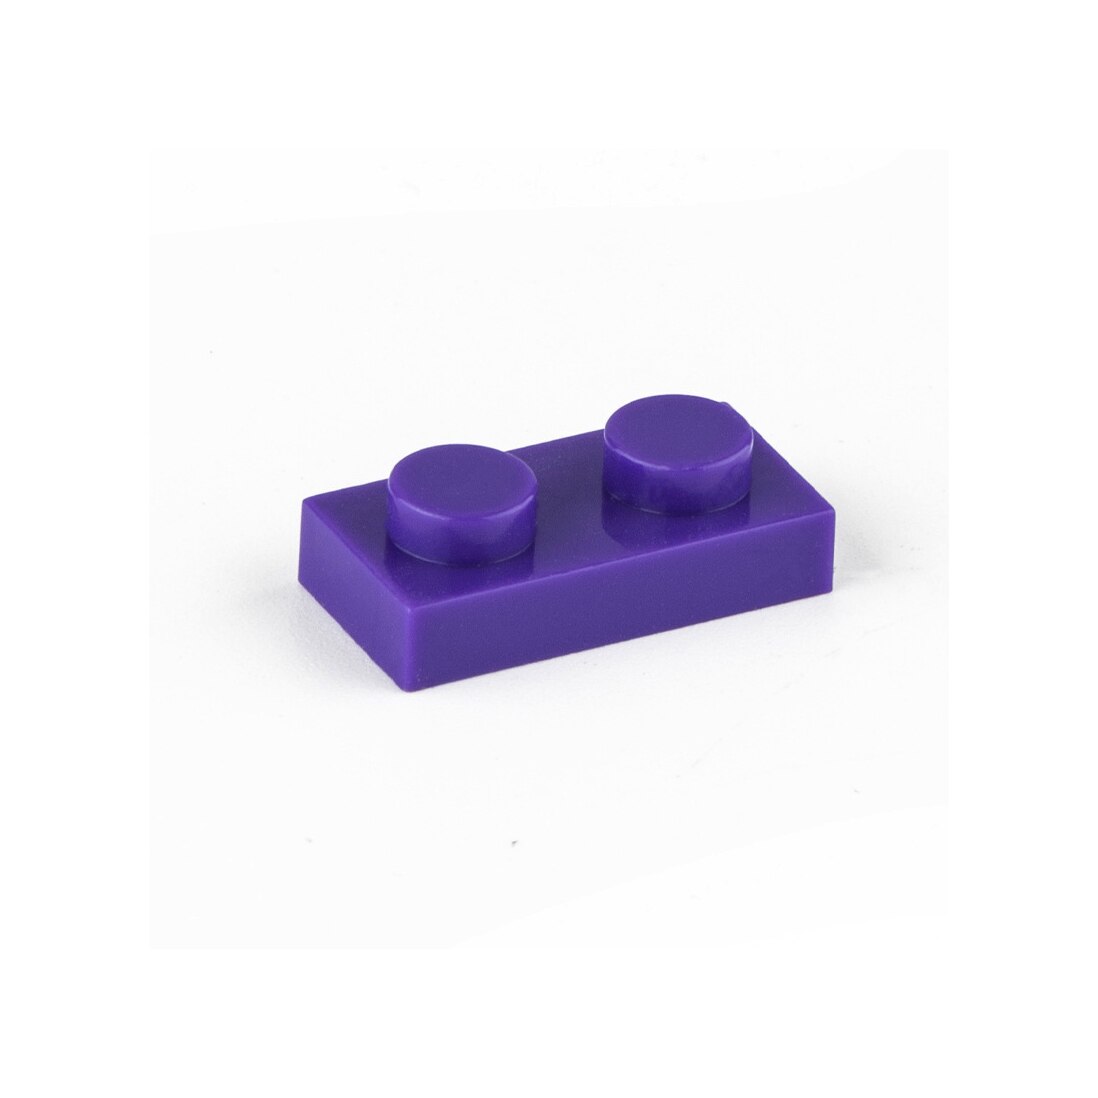 200pcs DIY Building Blocks Thin Figures Bricks 1x2 Dots 12Color Educational Creative Size Compatible With 3023 Toys for Children